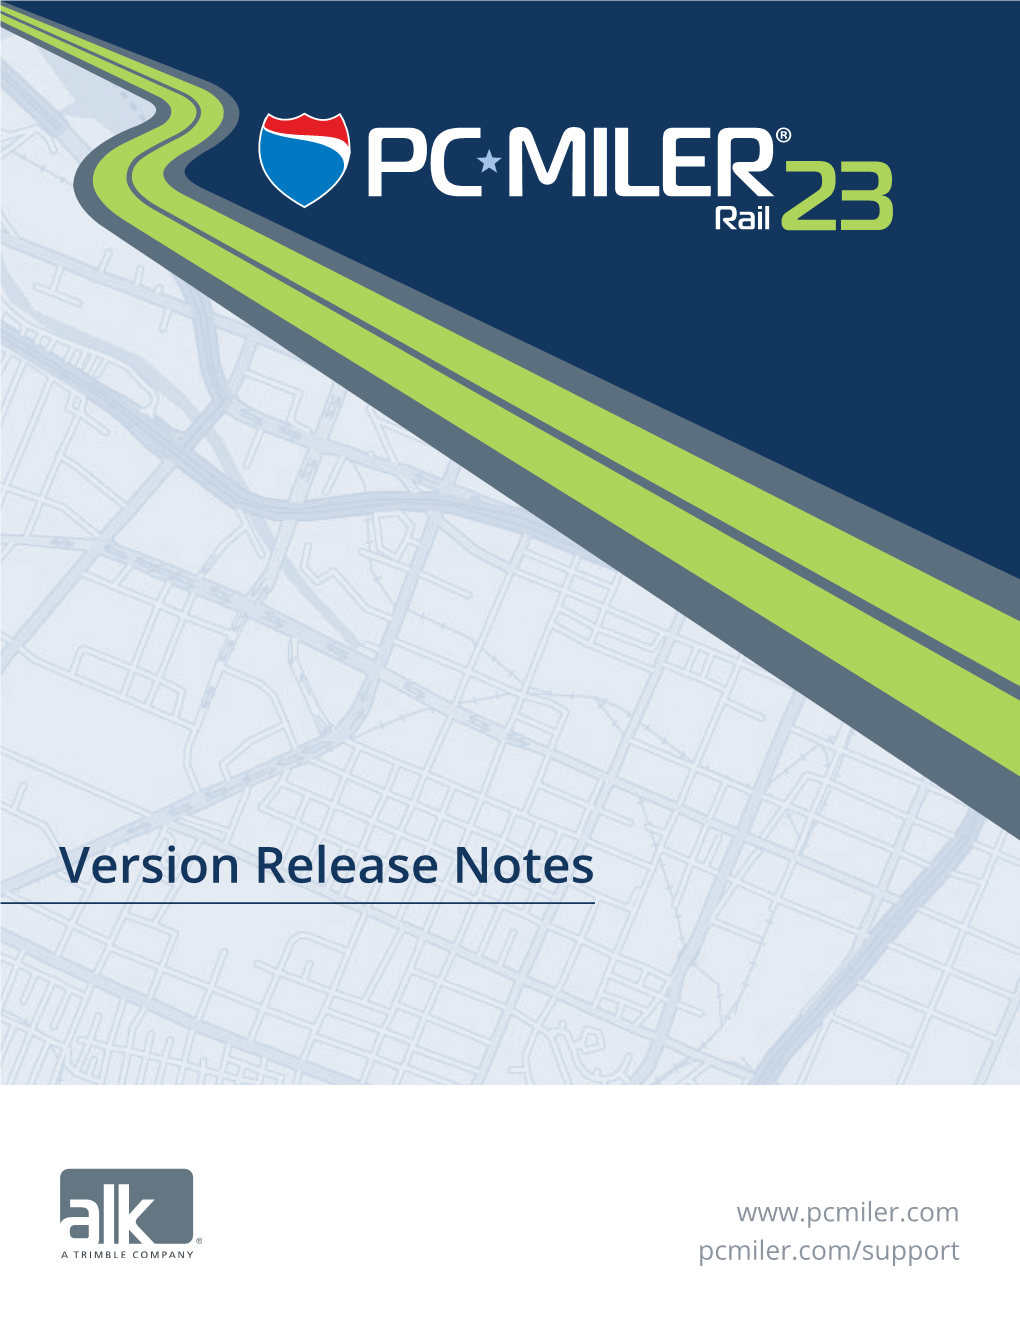 PC*MILER|Rail Version Release Notes